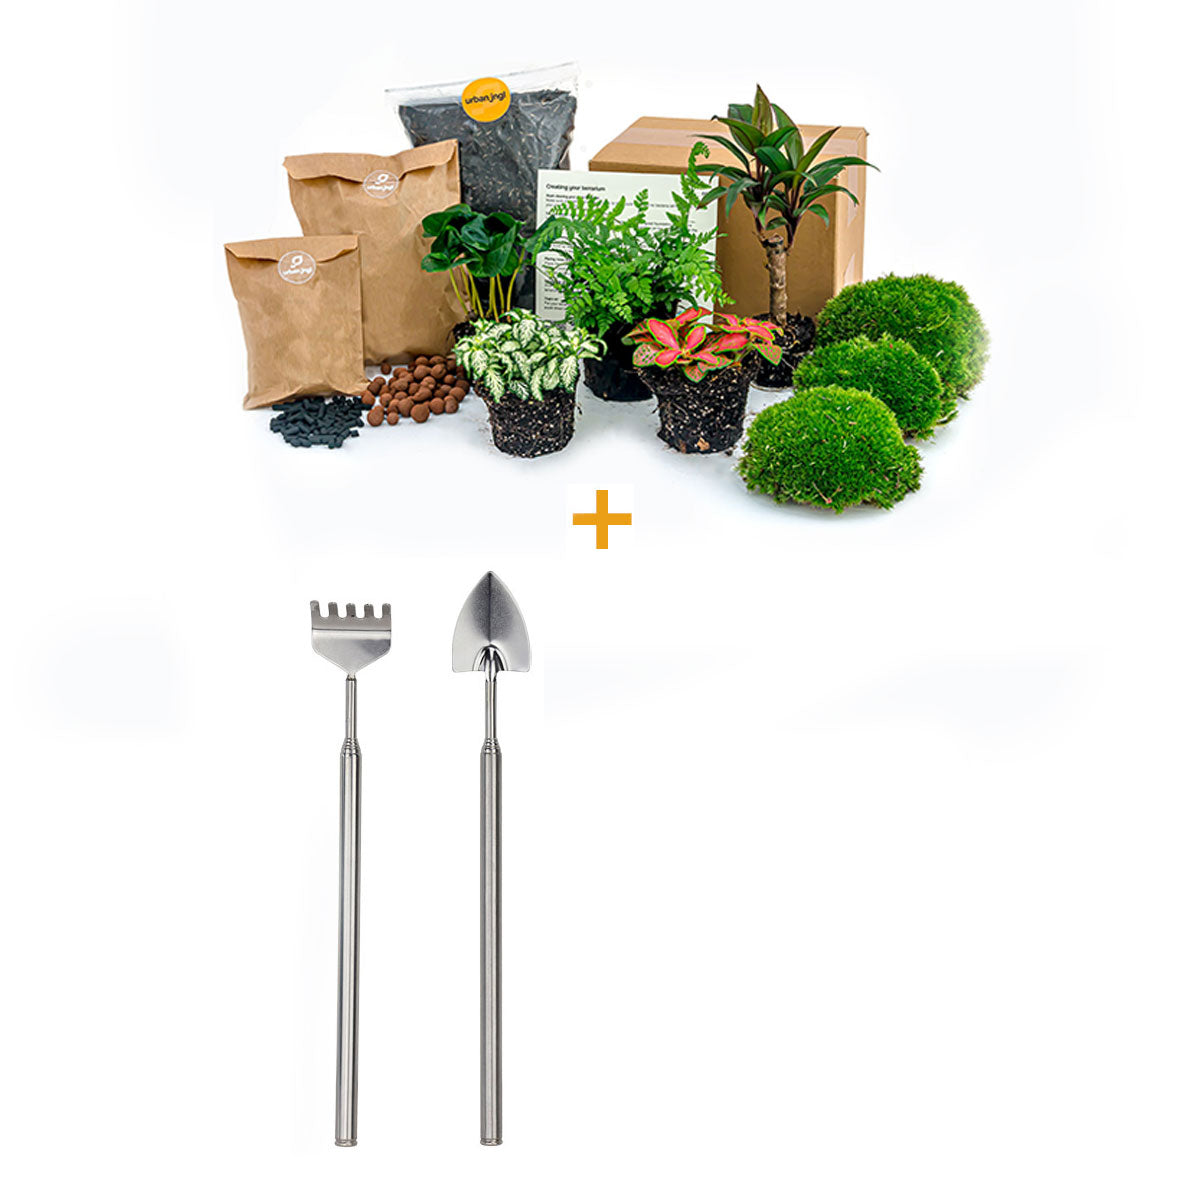 Terrarium Plants: How To Create Your Own Low-Maintenance Garden – Sprigbox